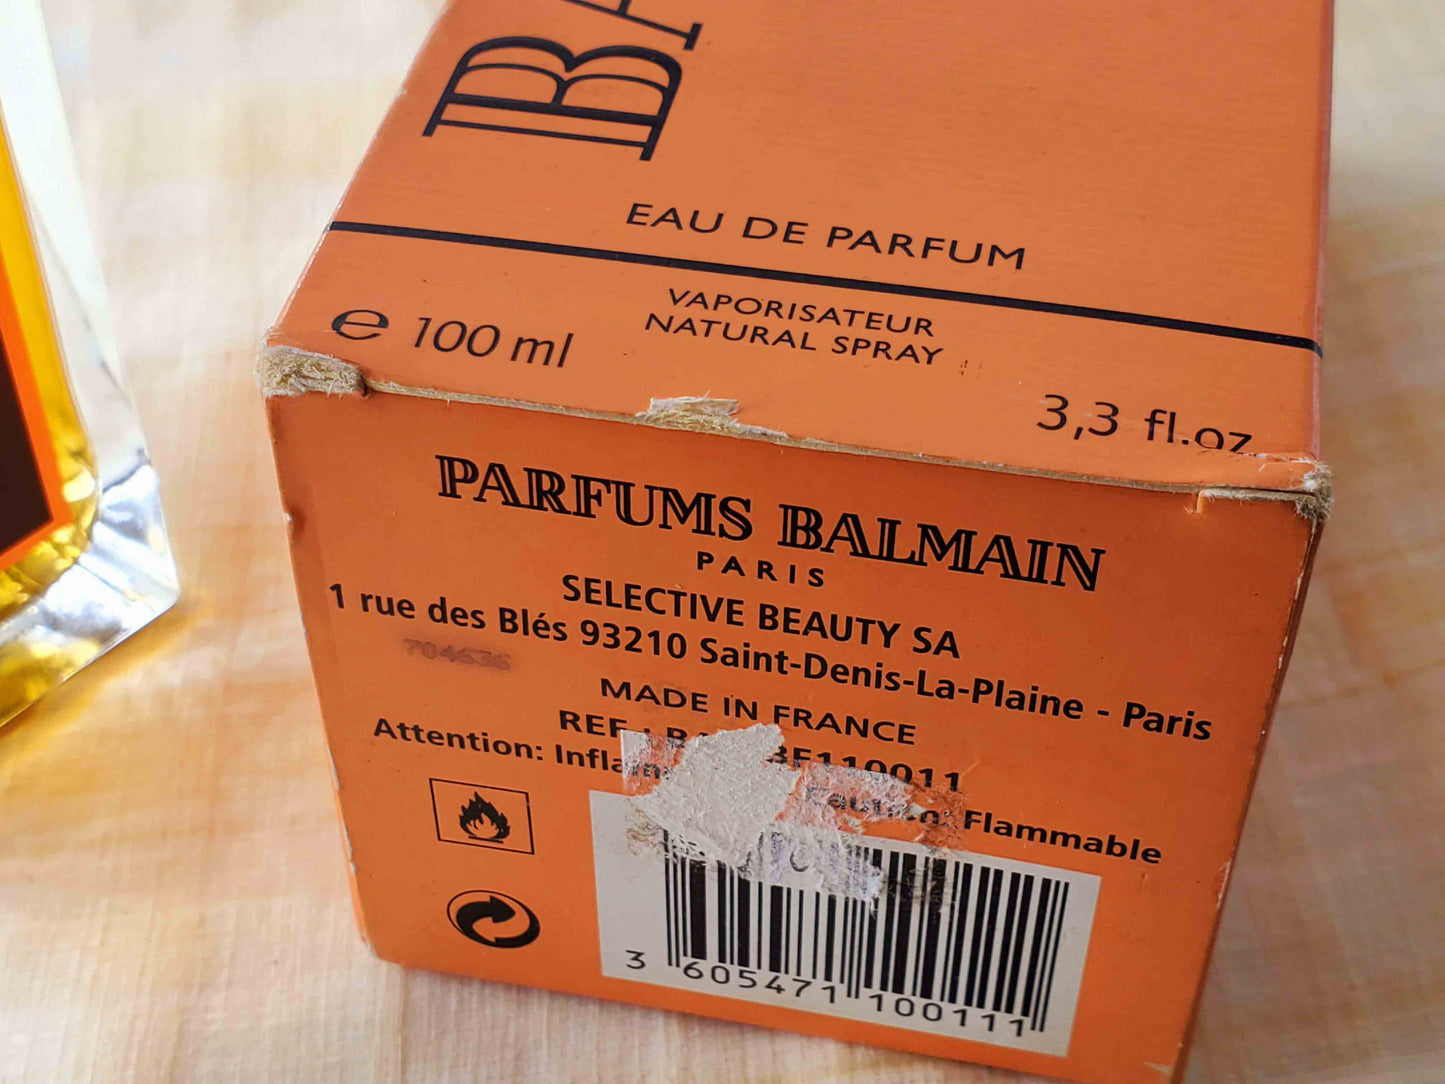 La Mome Pierre Balmain for women EDP Spray 100 ml 3.4 oz, Rare, Vintage